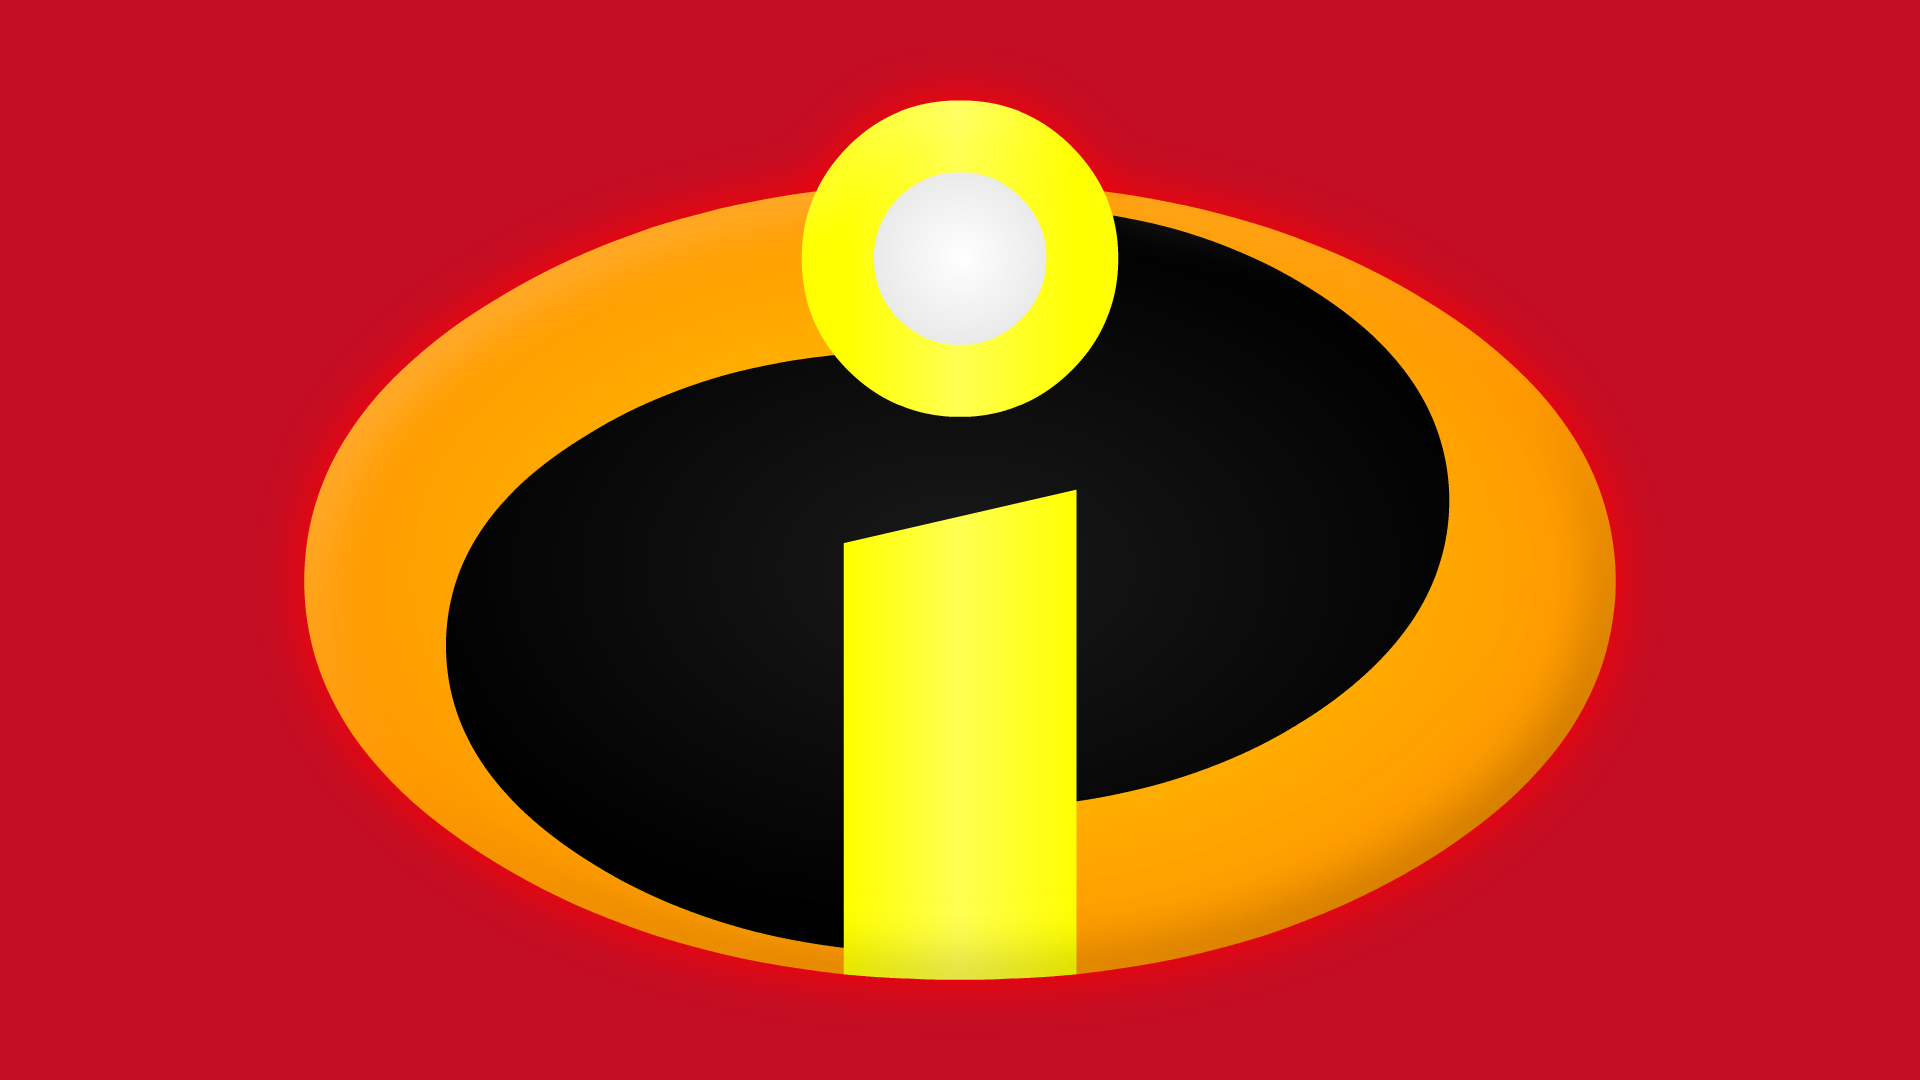 The Incredibles Symbol